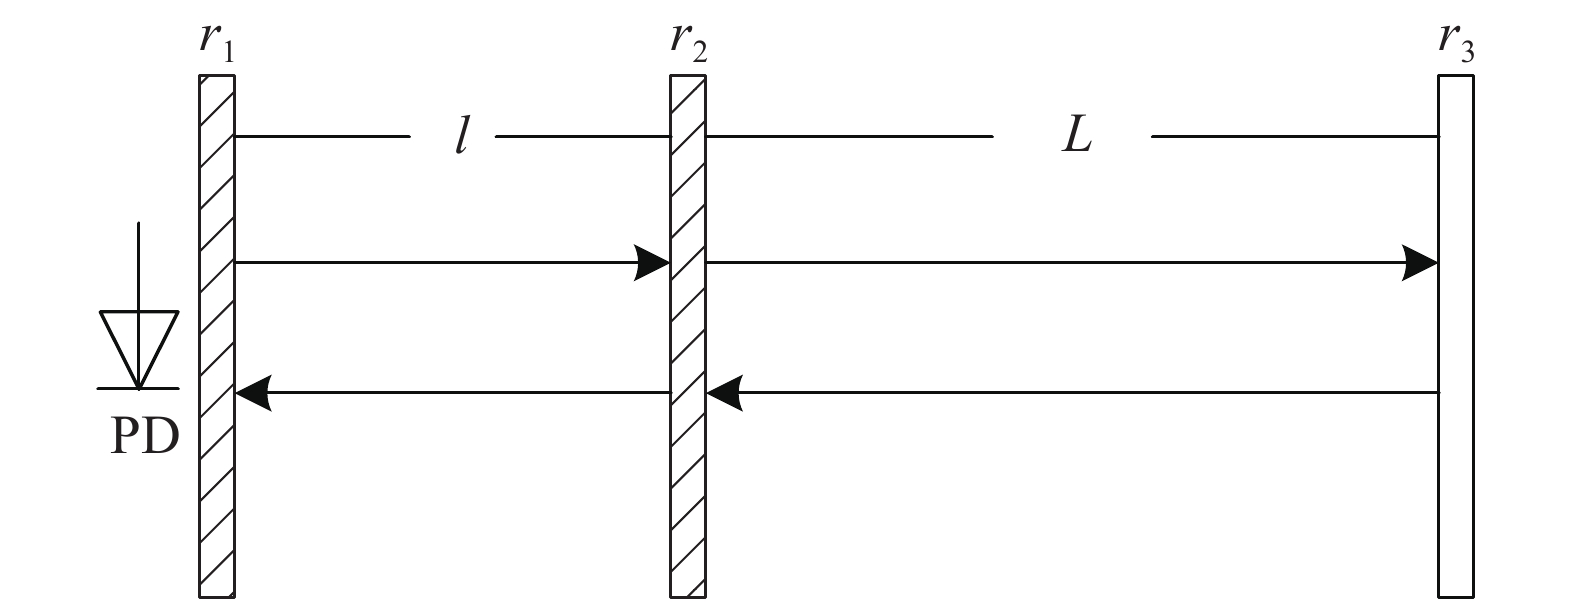 Theoretical model of three mirror cavity